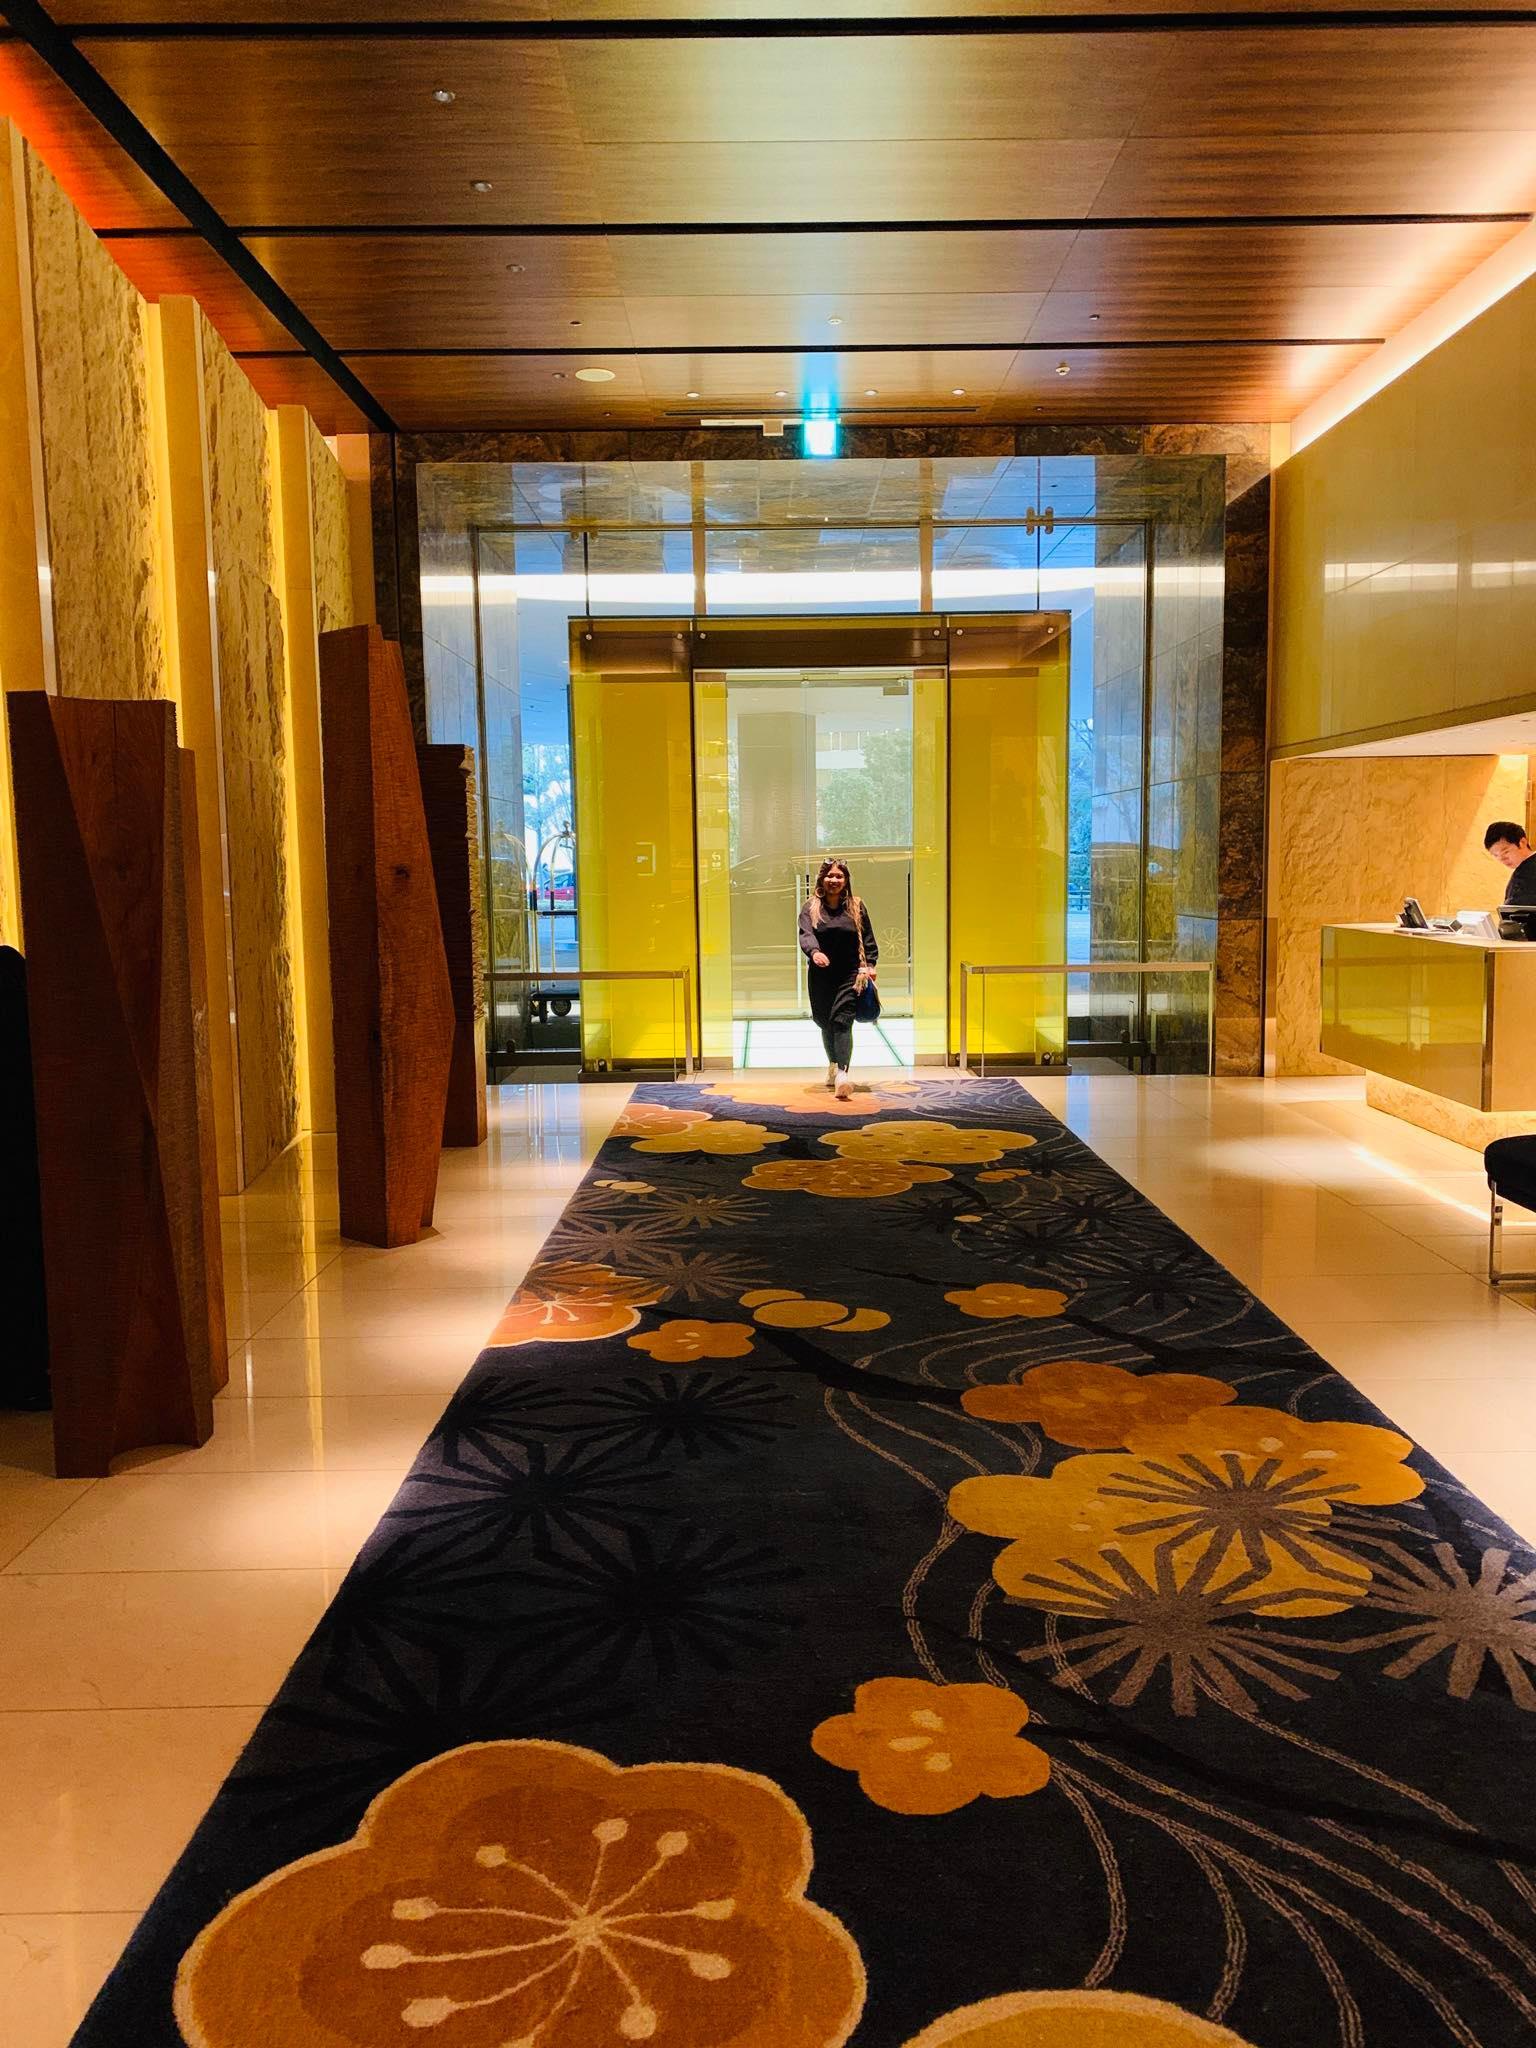 My Luxury Hotel Experience with InterContinental Osaka